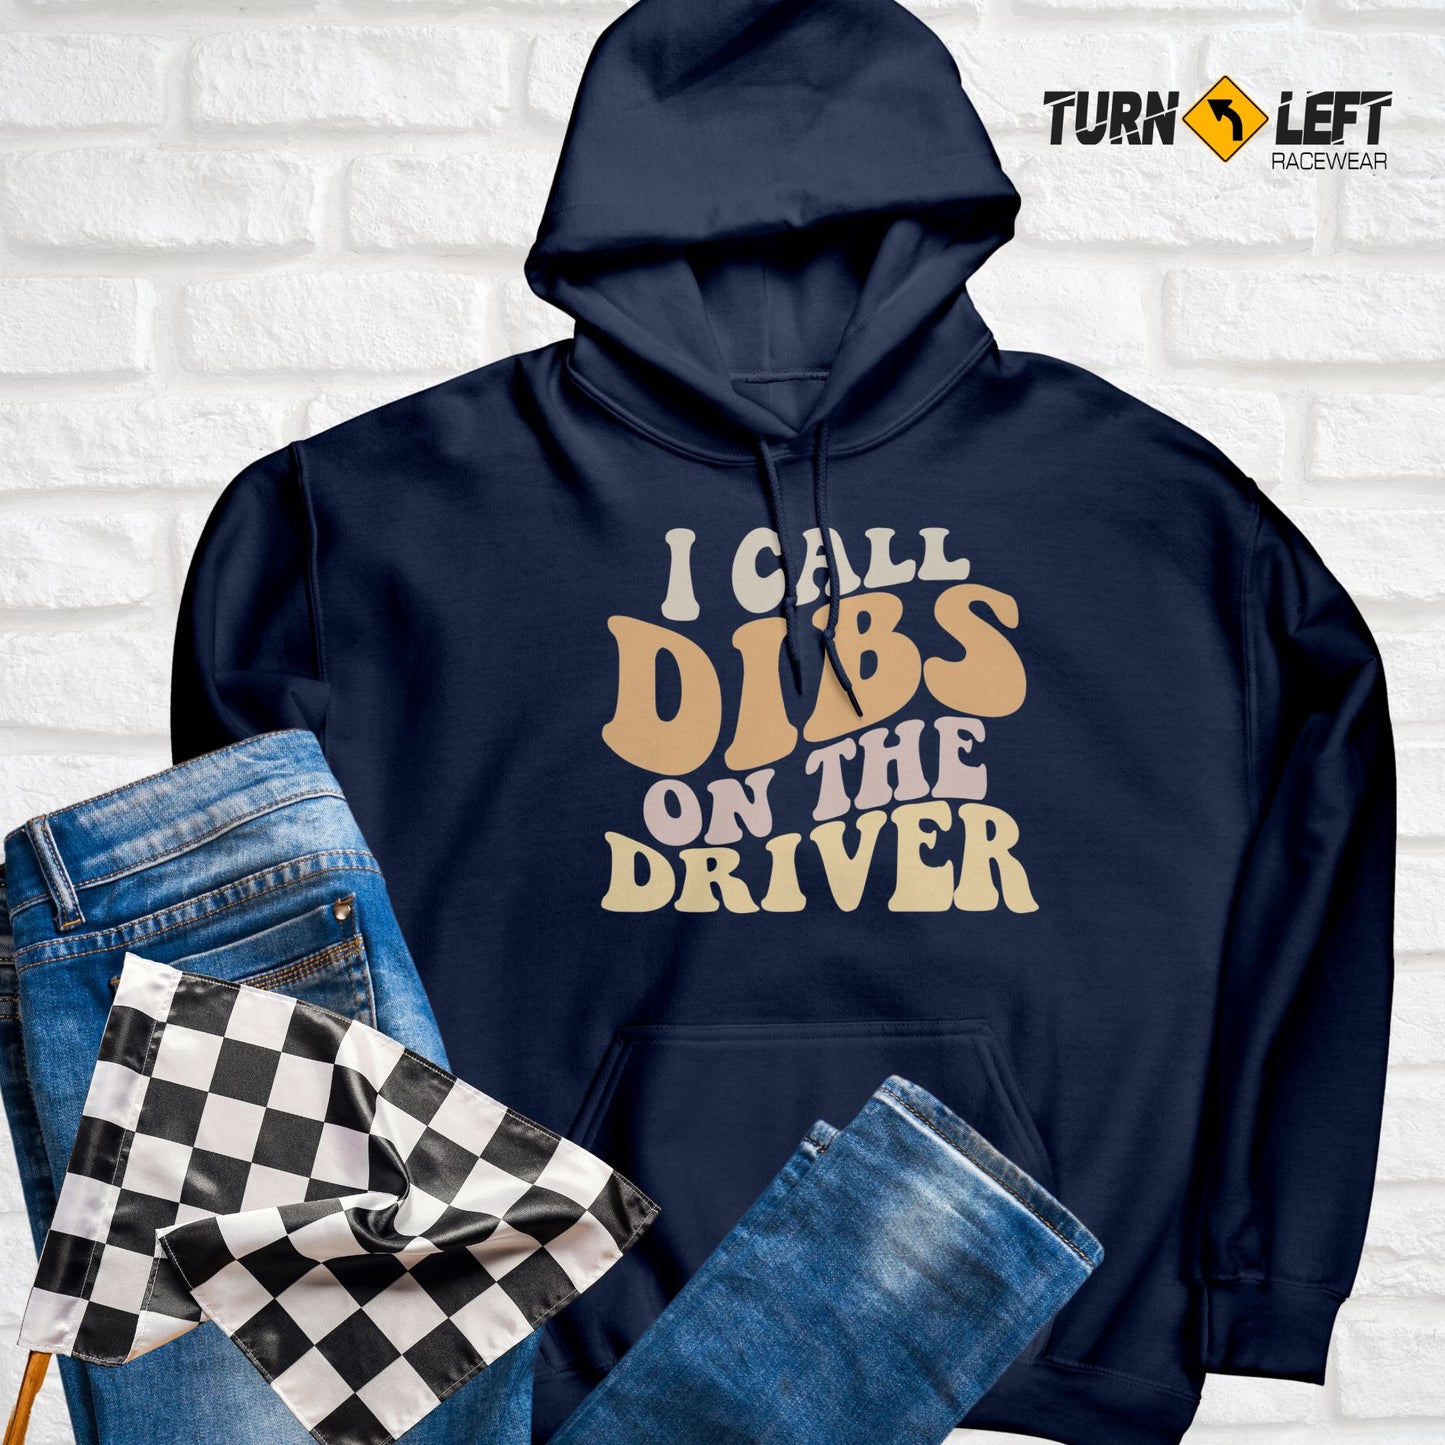 I Call Dibs On The Driver Hooded Sweatshirt. Race Wife Sweatshirt, Racers Girlfriend Sweatshirts. Dirt Track Racing Sweatshirts For Women.